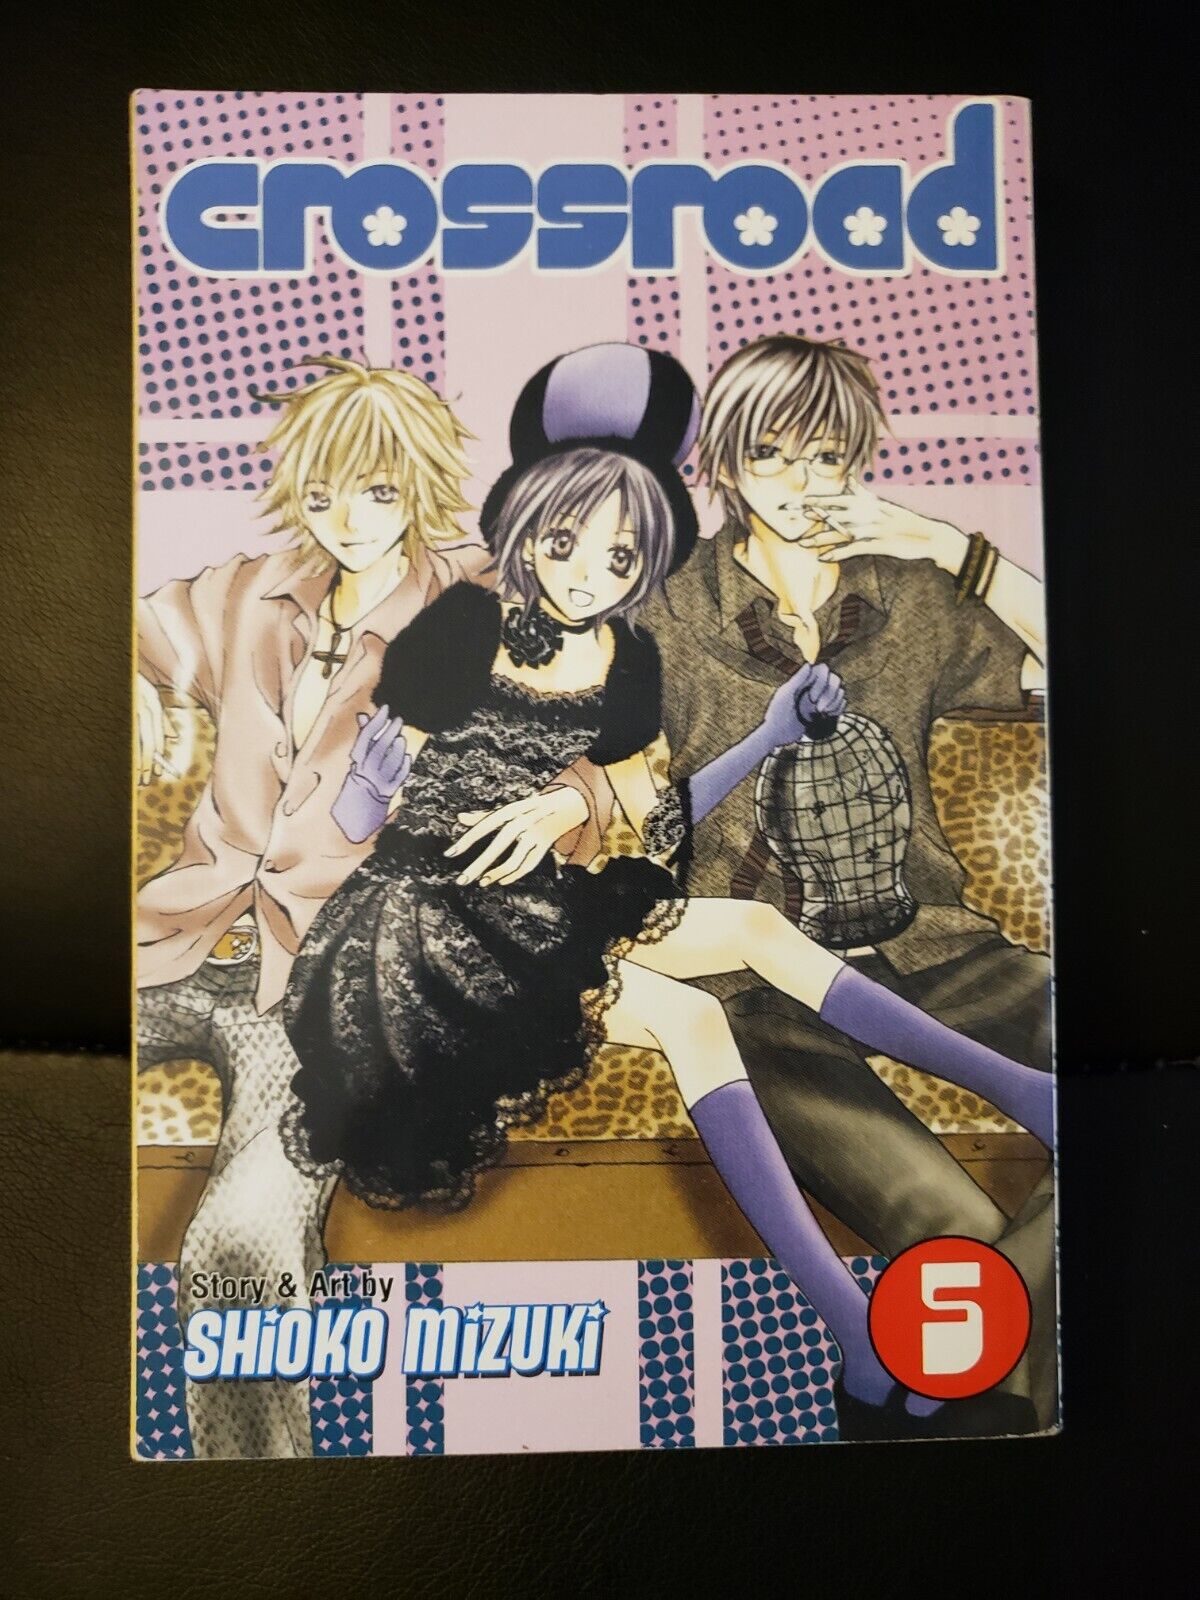 Crossroad Vol 5 TP Manga Shioko Mizuki ENGLISH MAGNA FAST 